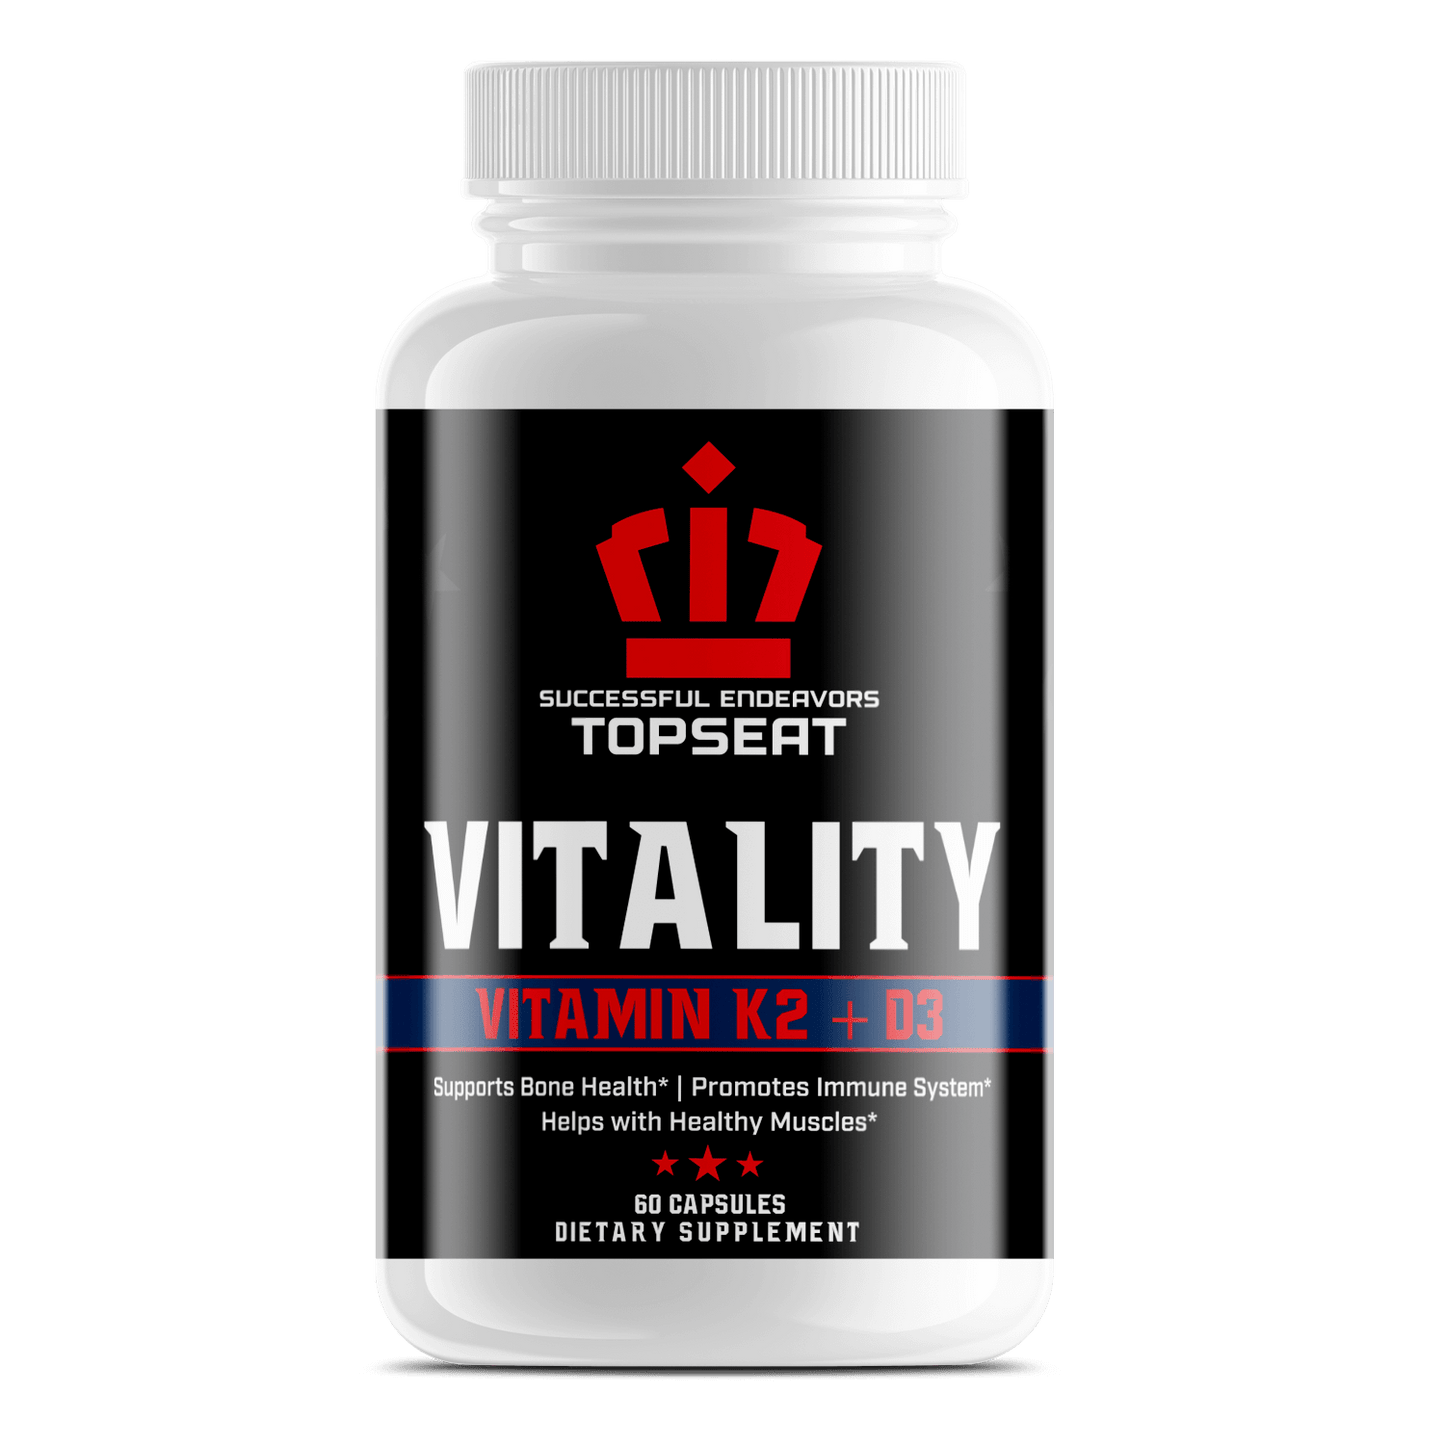 Topseat Vitality Vitamin K2 + D3